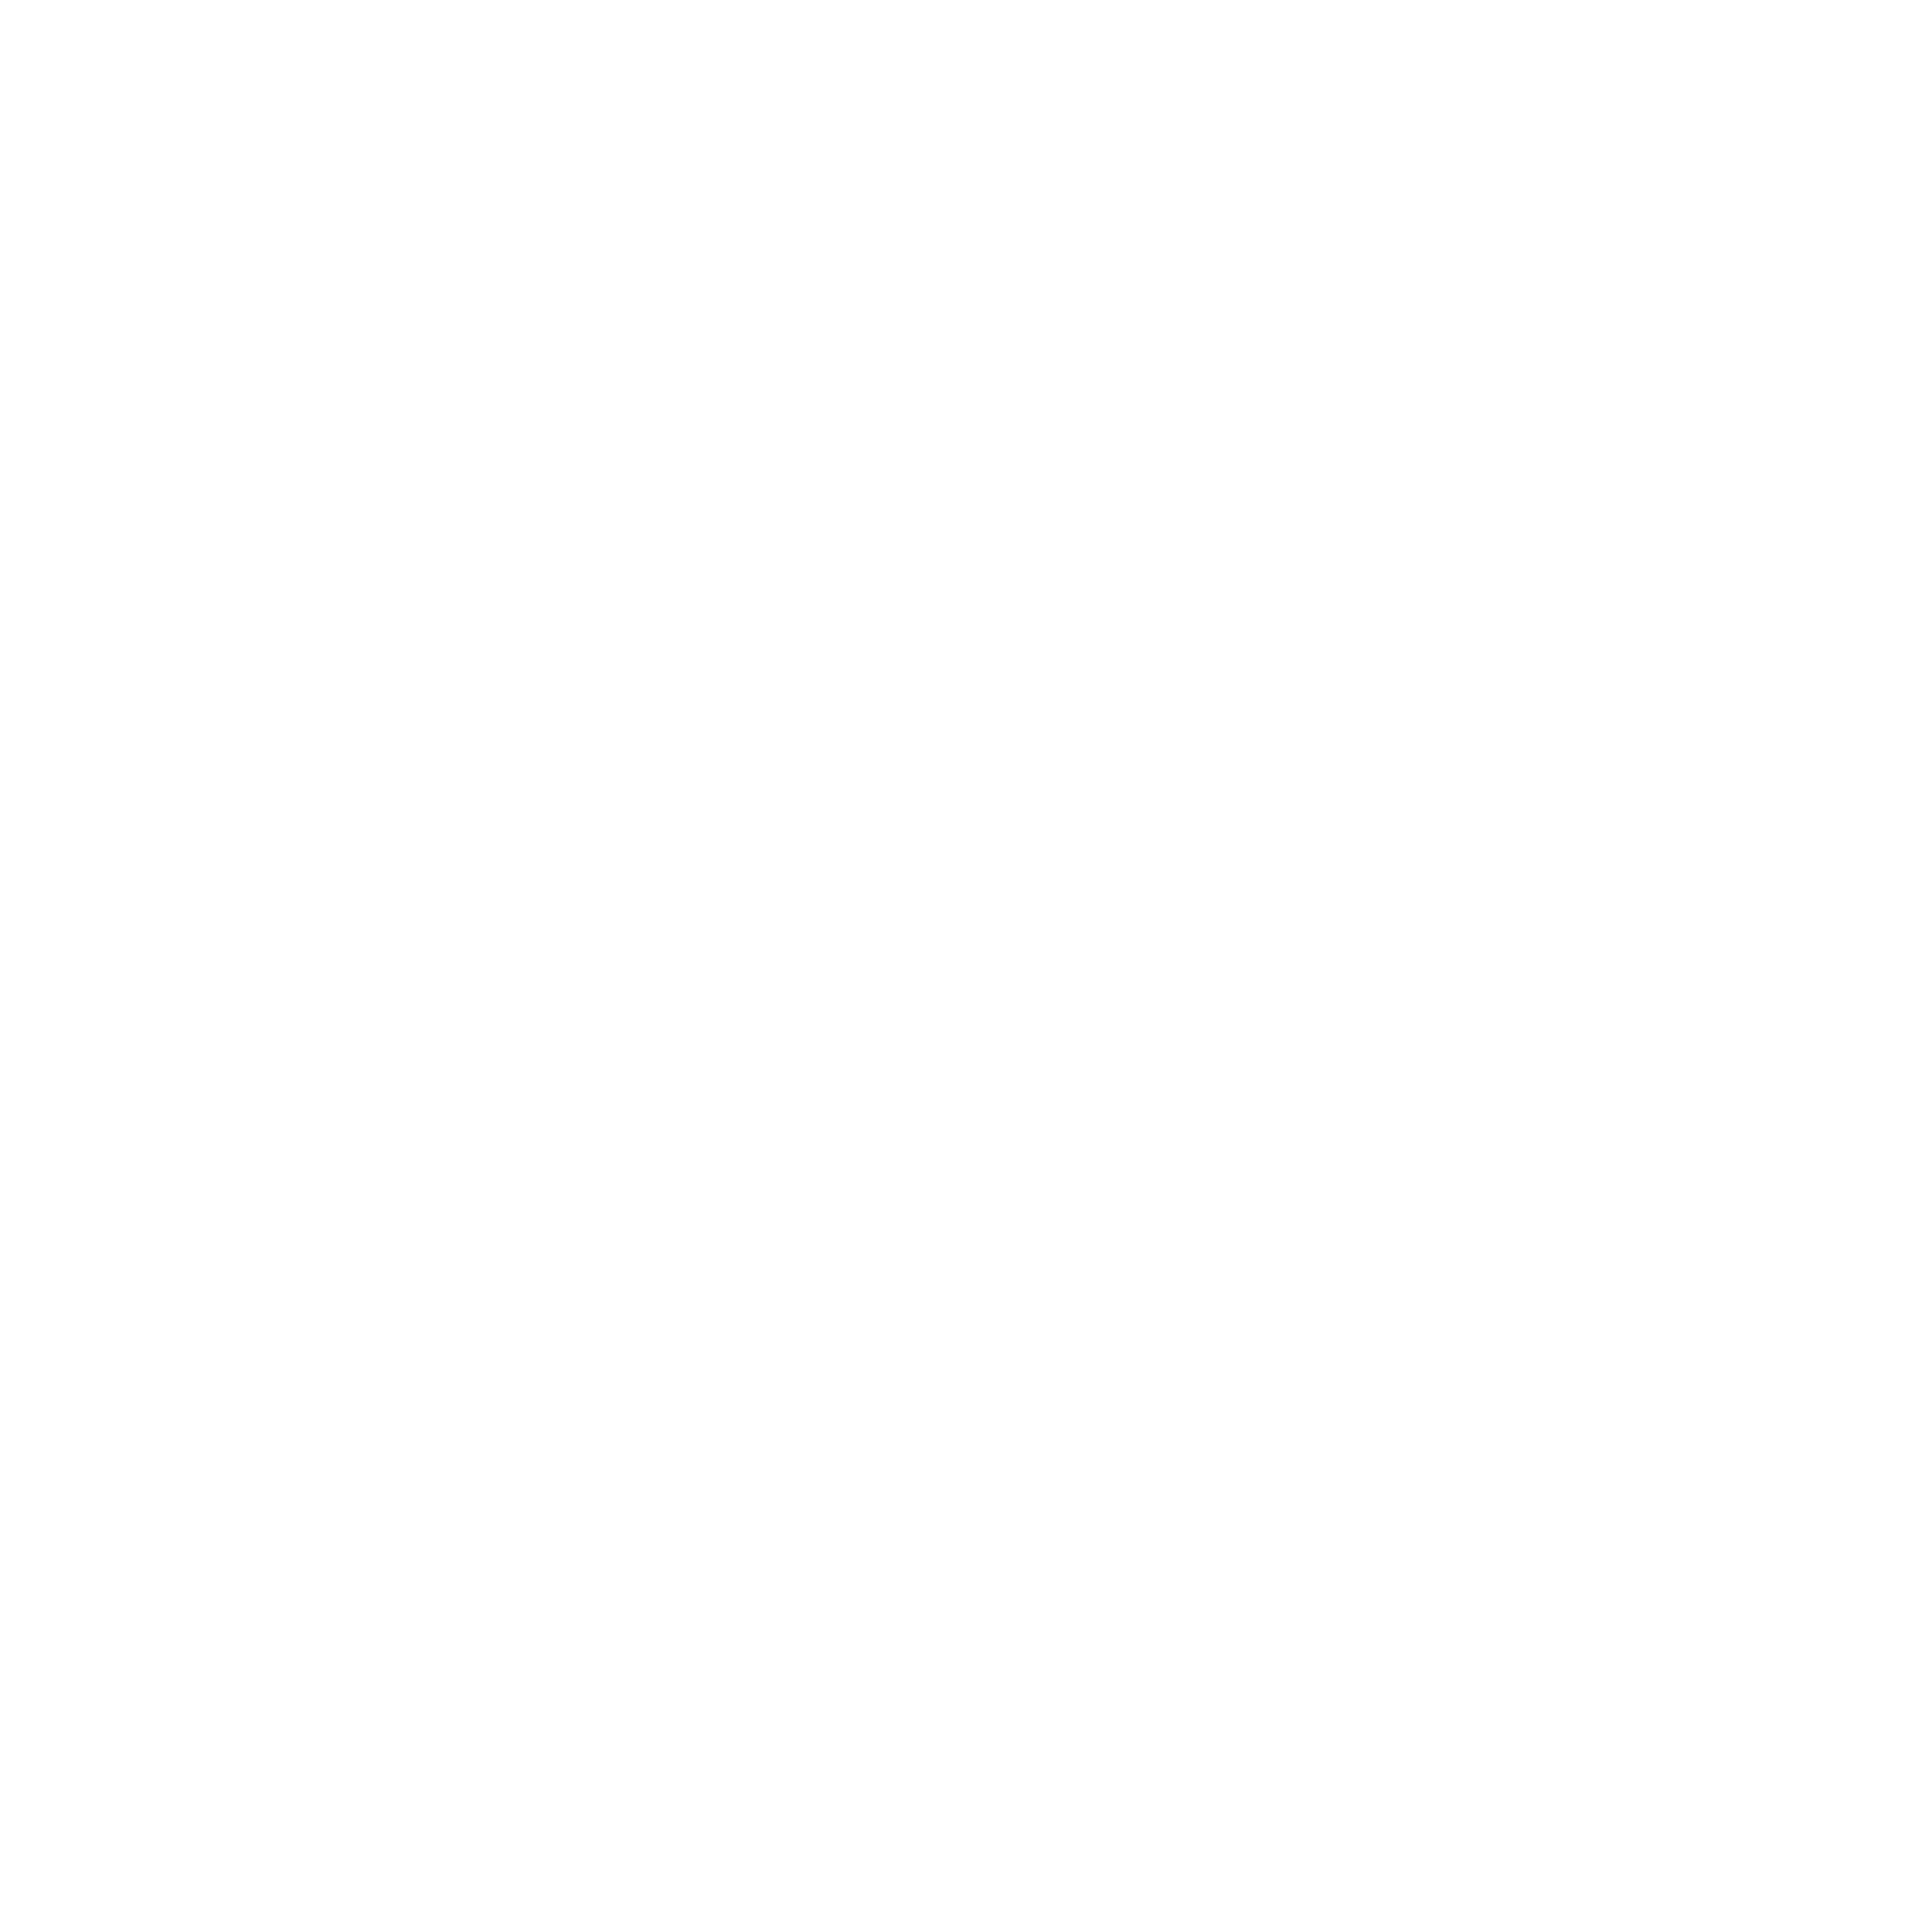 Art In Dialogue